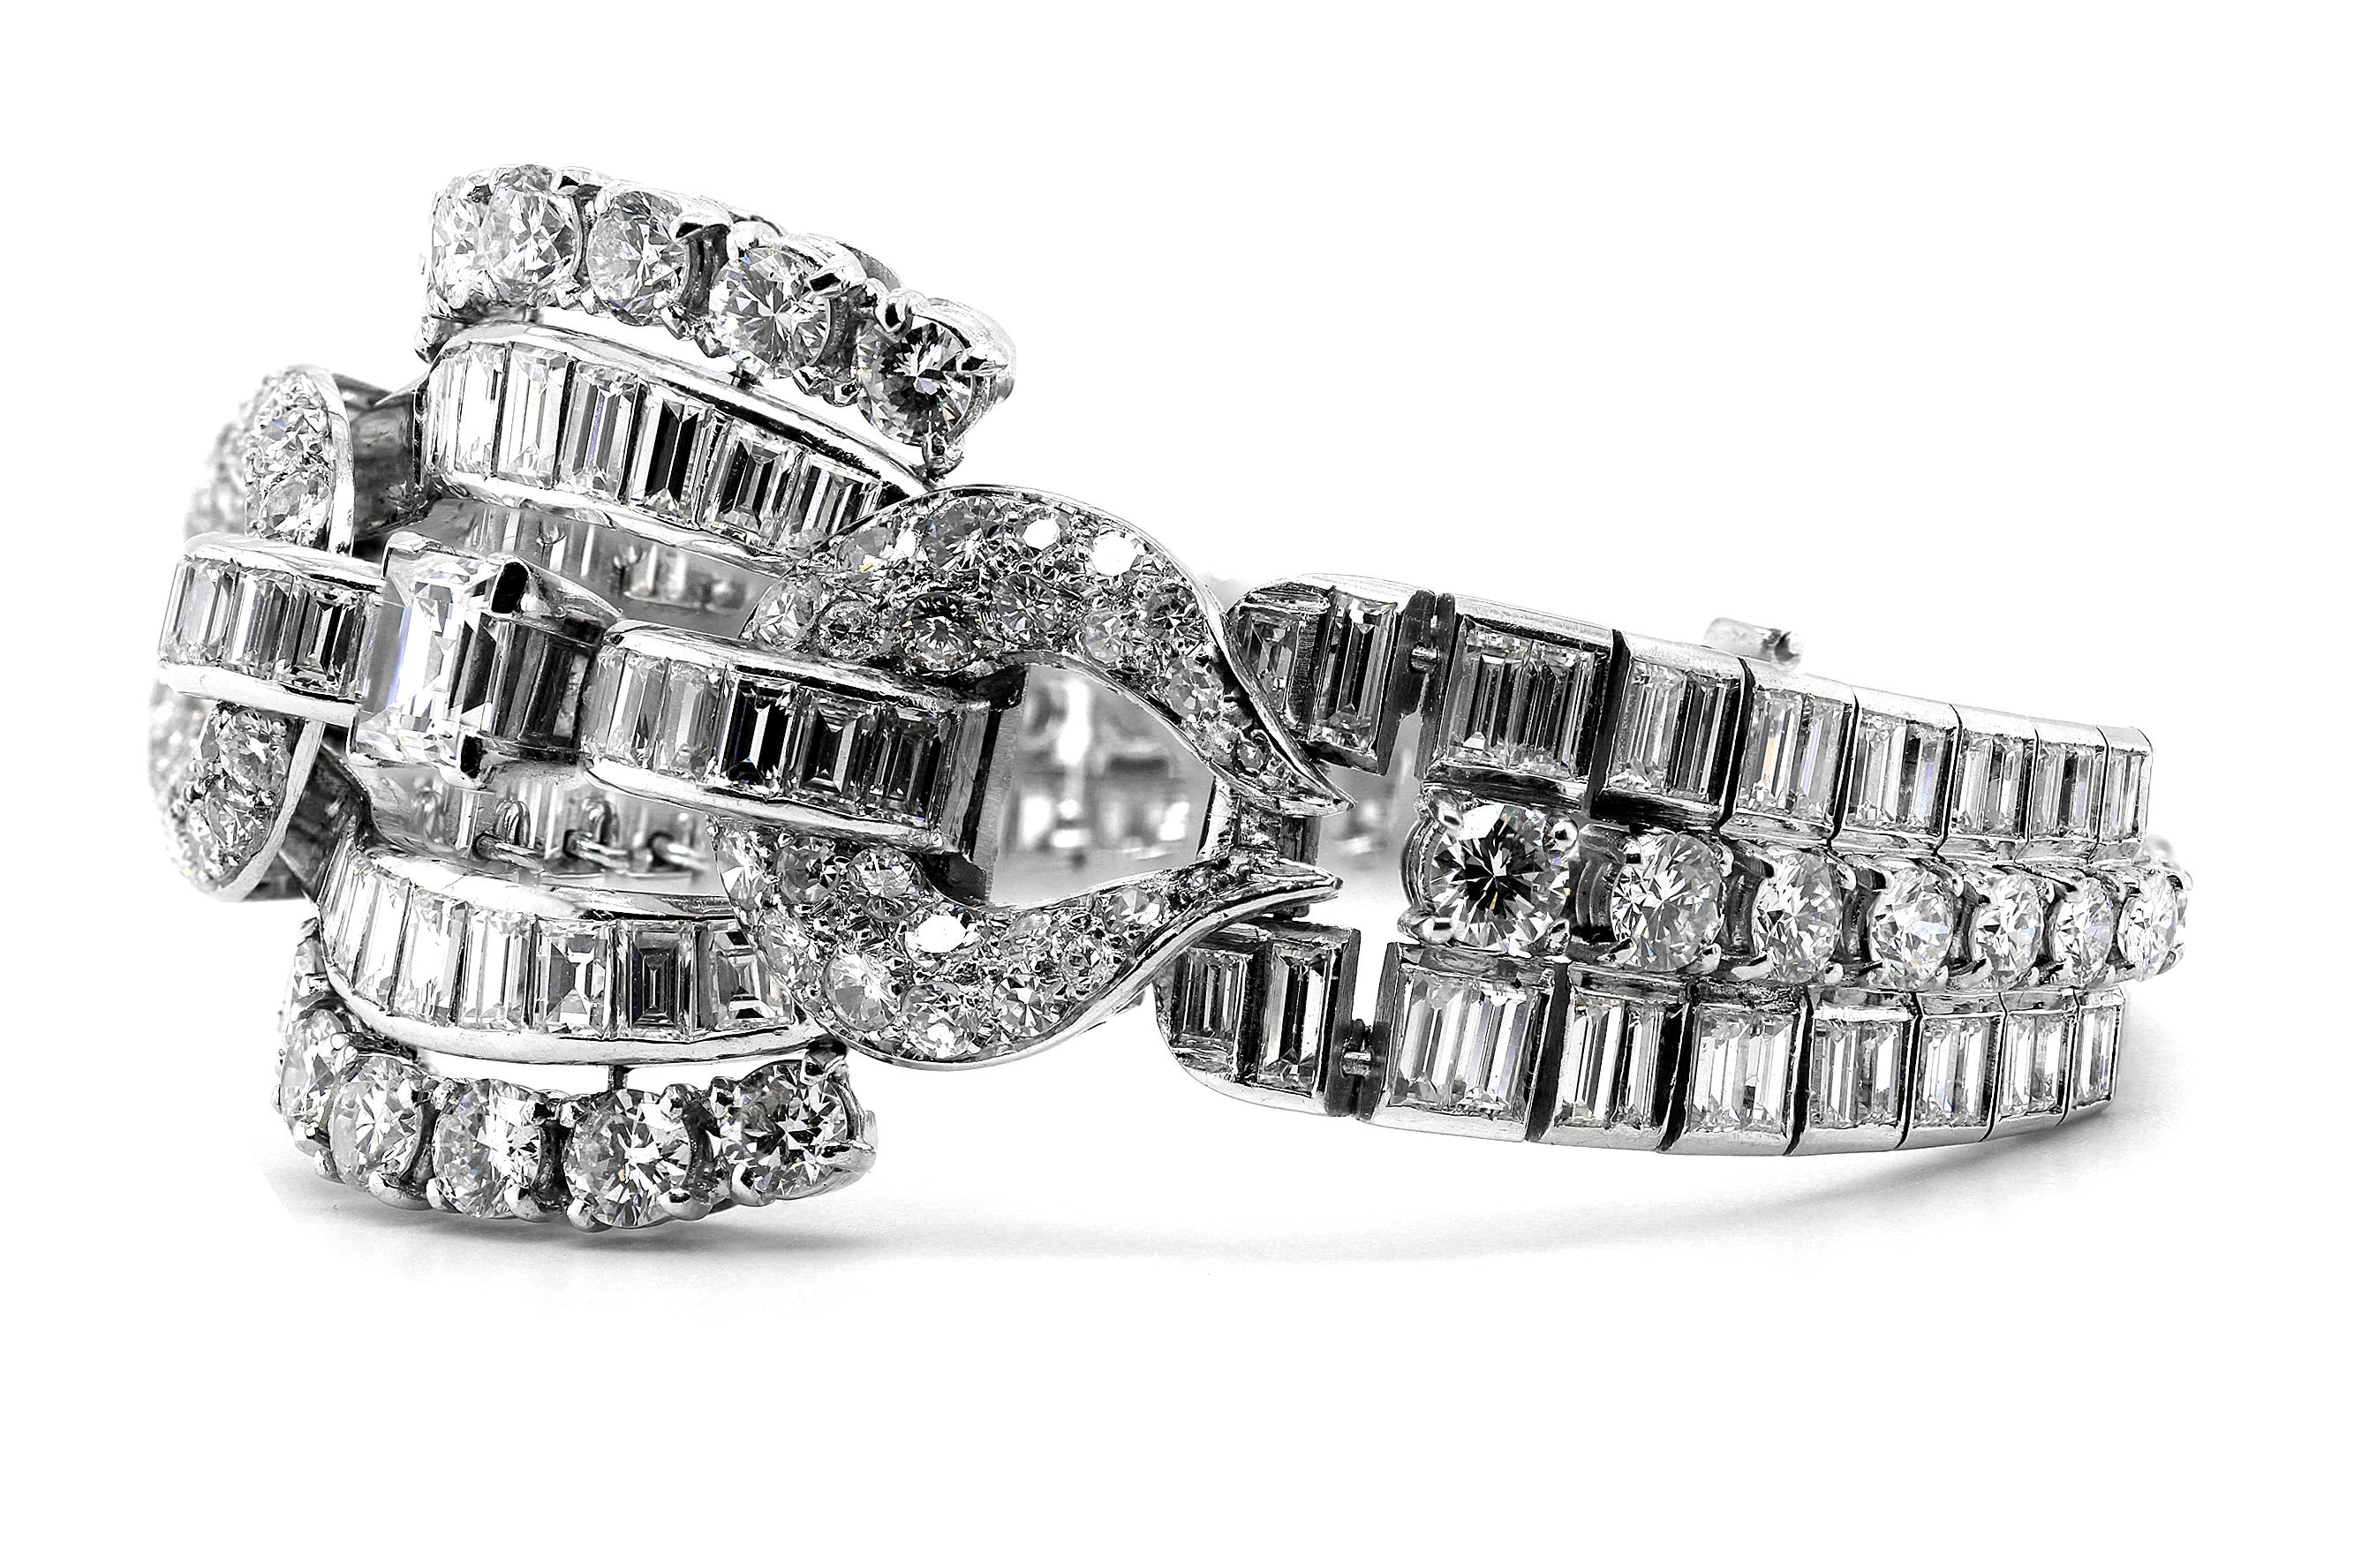 Women's Vintage/Retro/Art Deco, Diamond Cocktail Wide Bracelet Handcrafted in Platinum